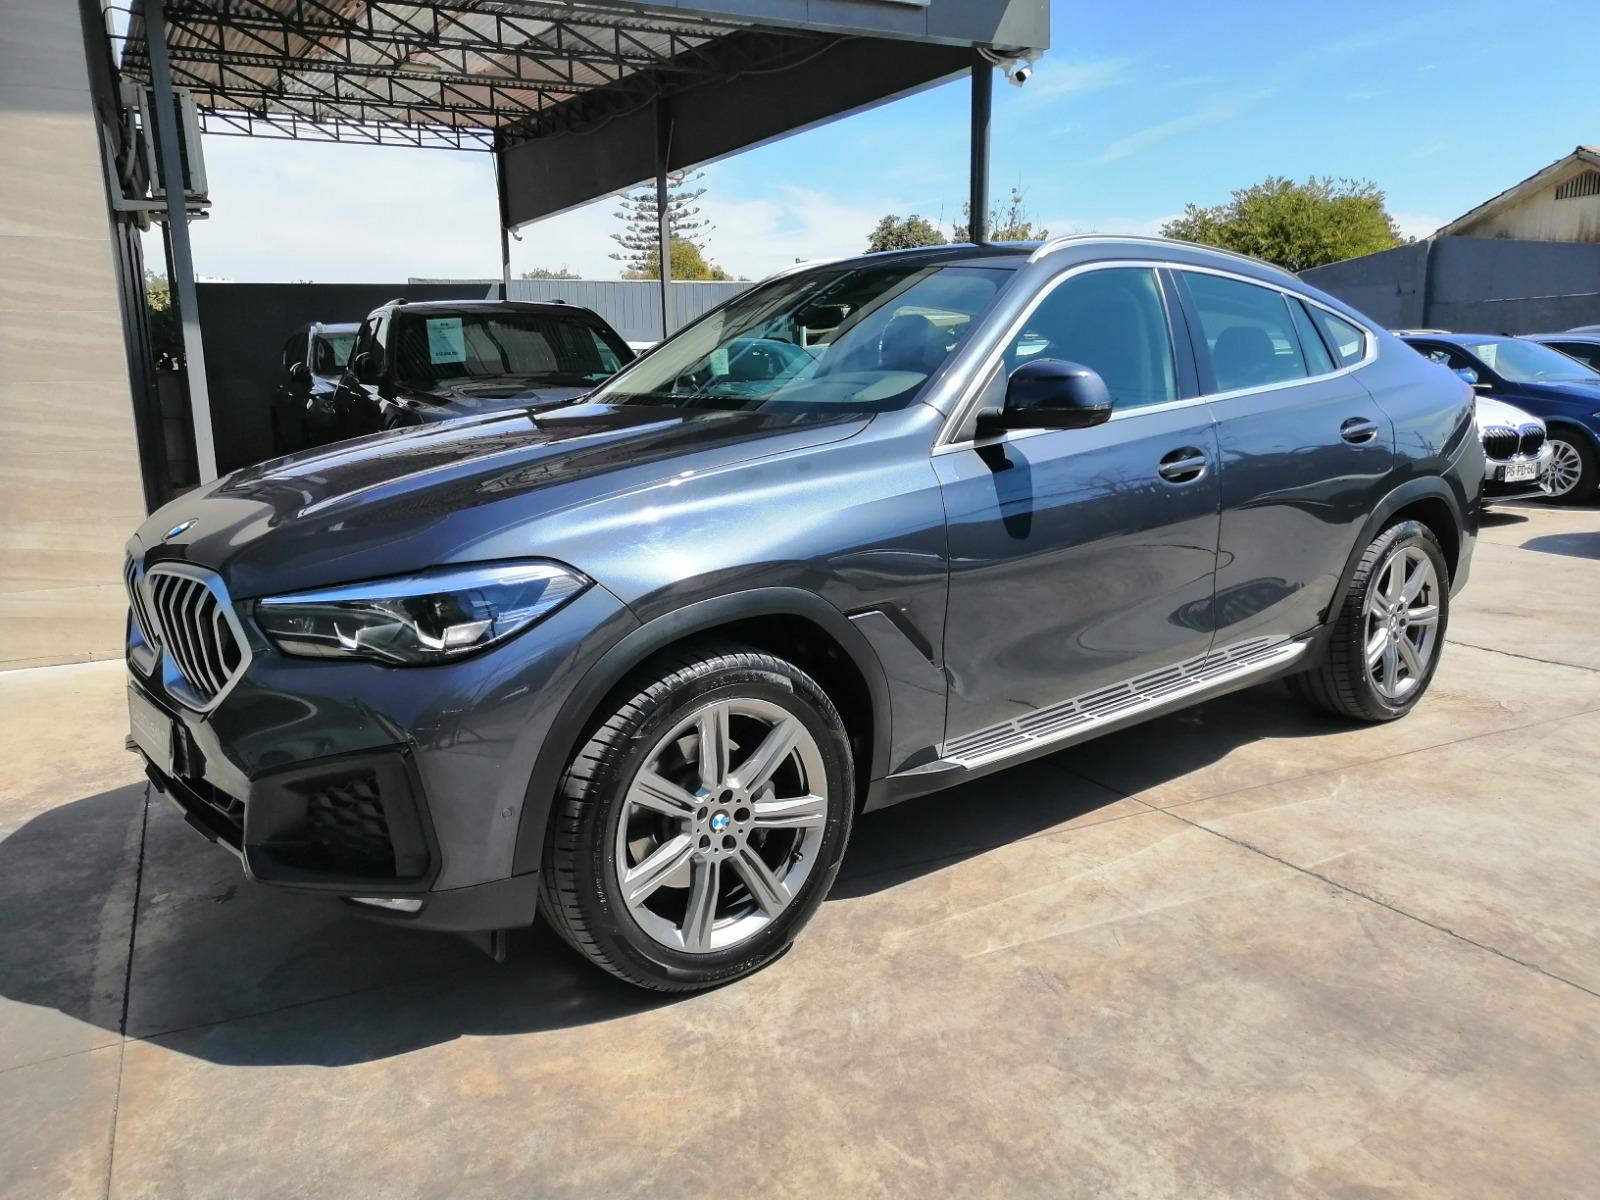 BMW X6 XDRIVE30D 3.0 AT DIESEL 2021 BUEN ESTADO,2 LLAVES - 